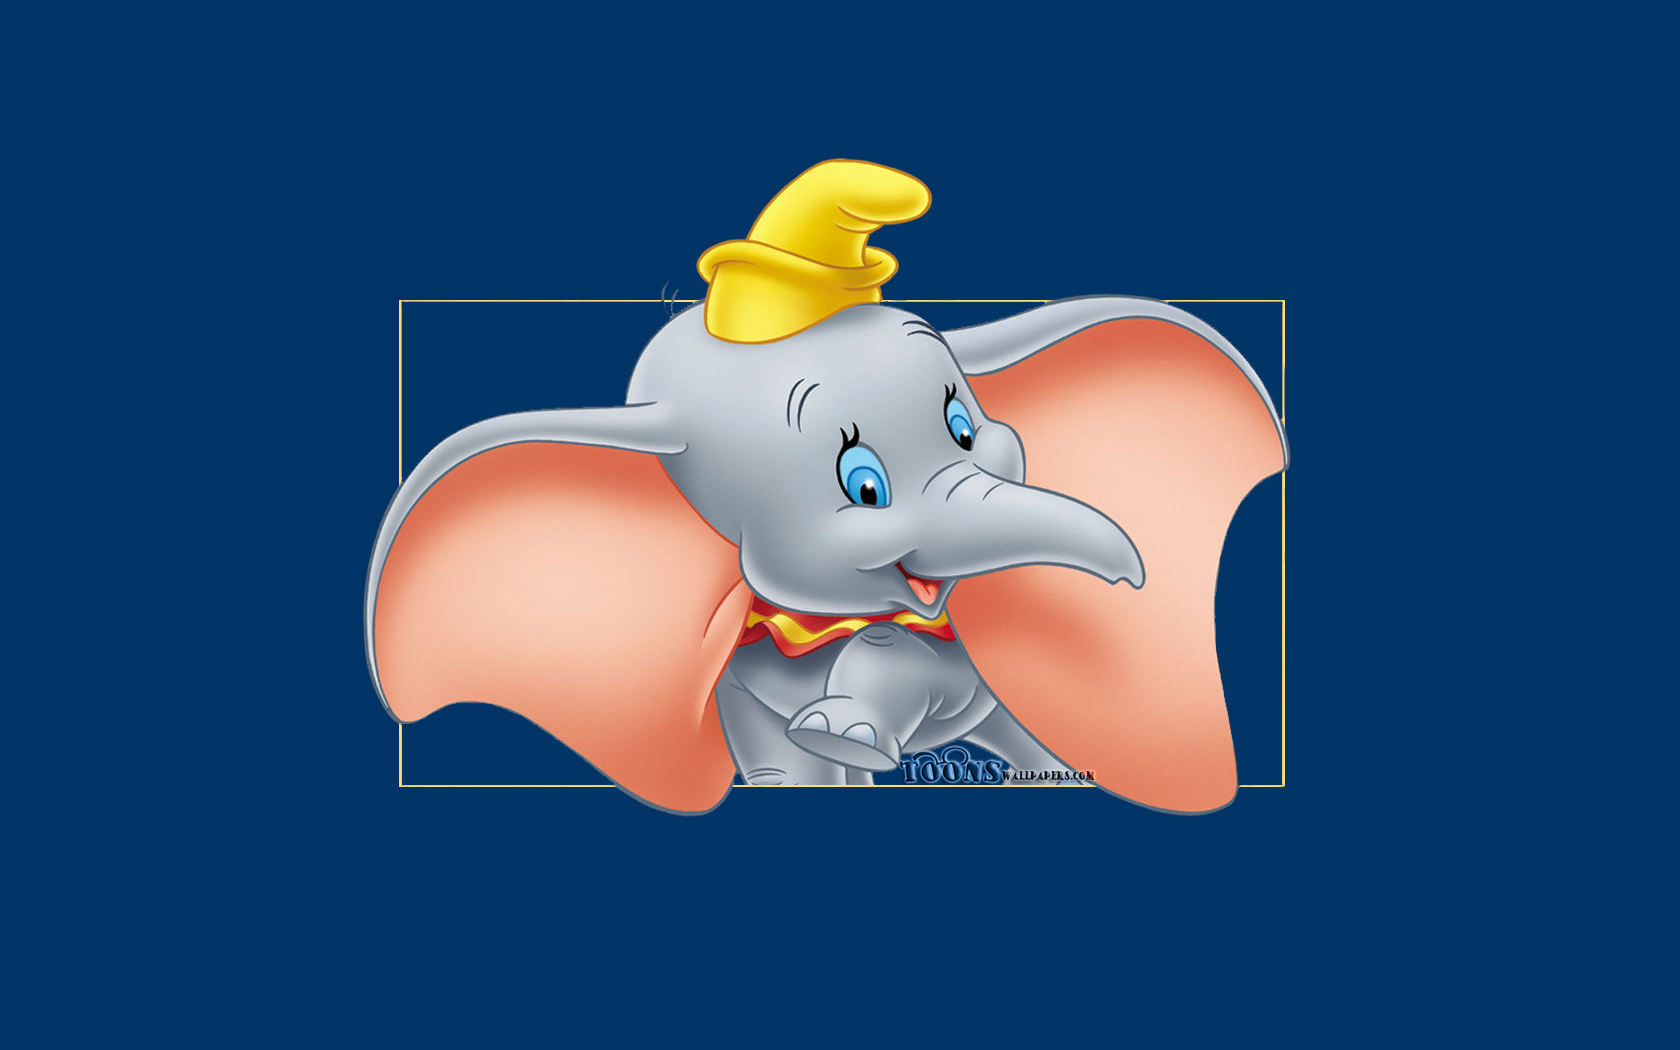 Dumbo - Dumbo Wallpaper (42723017) - Fanpop